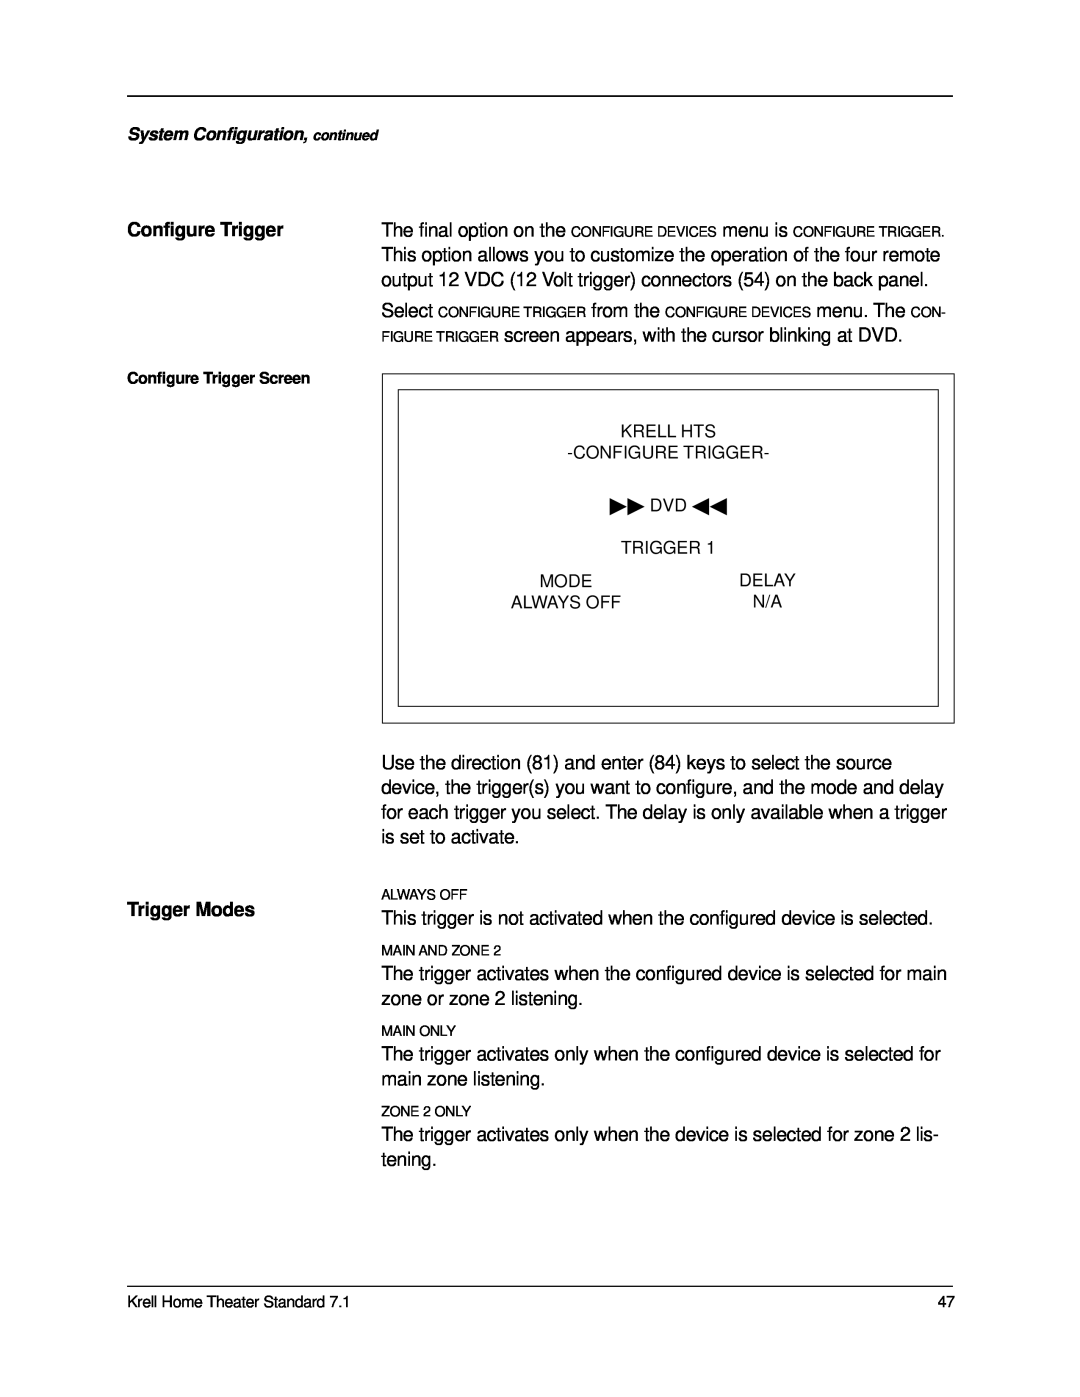 Krell Industries 7.1 manual Configure Trigger, Trigger Modes 